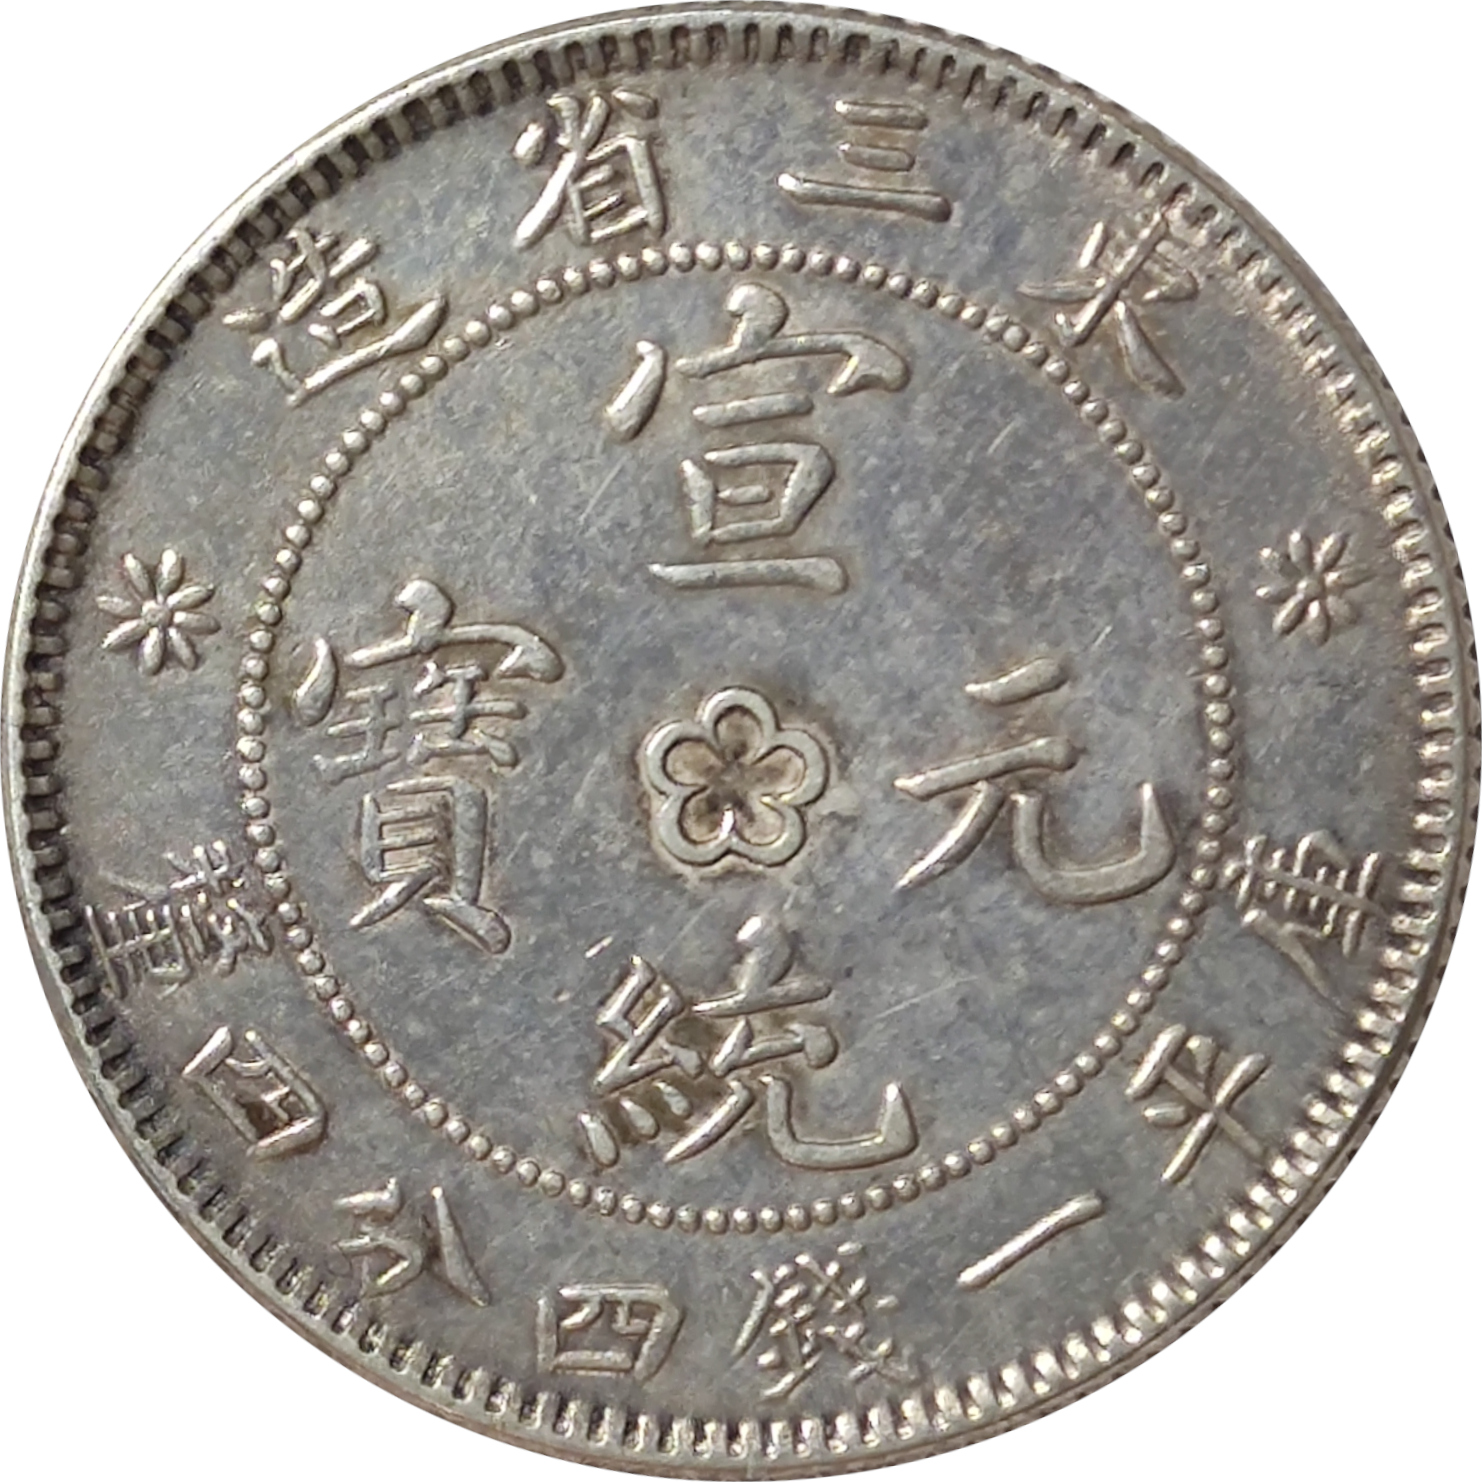 20 cents - Dragon de face - MANCHURIAN PROVINCES - Xuantong